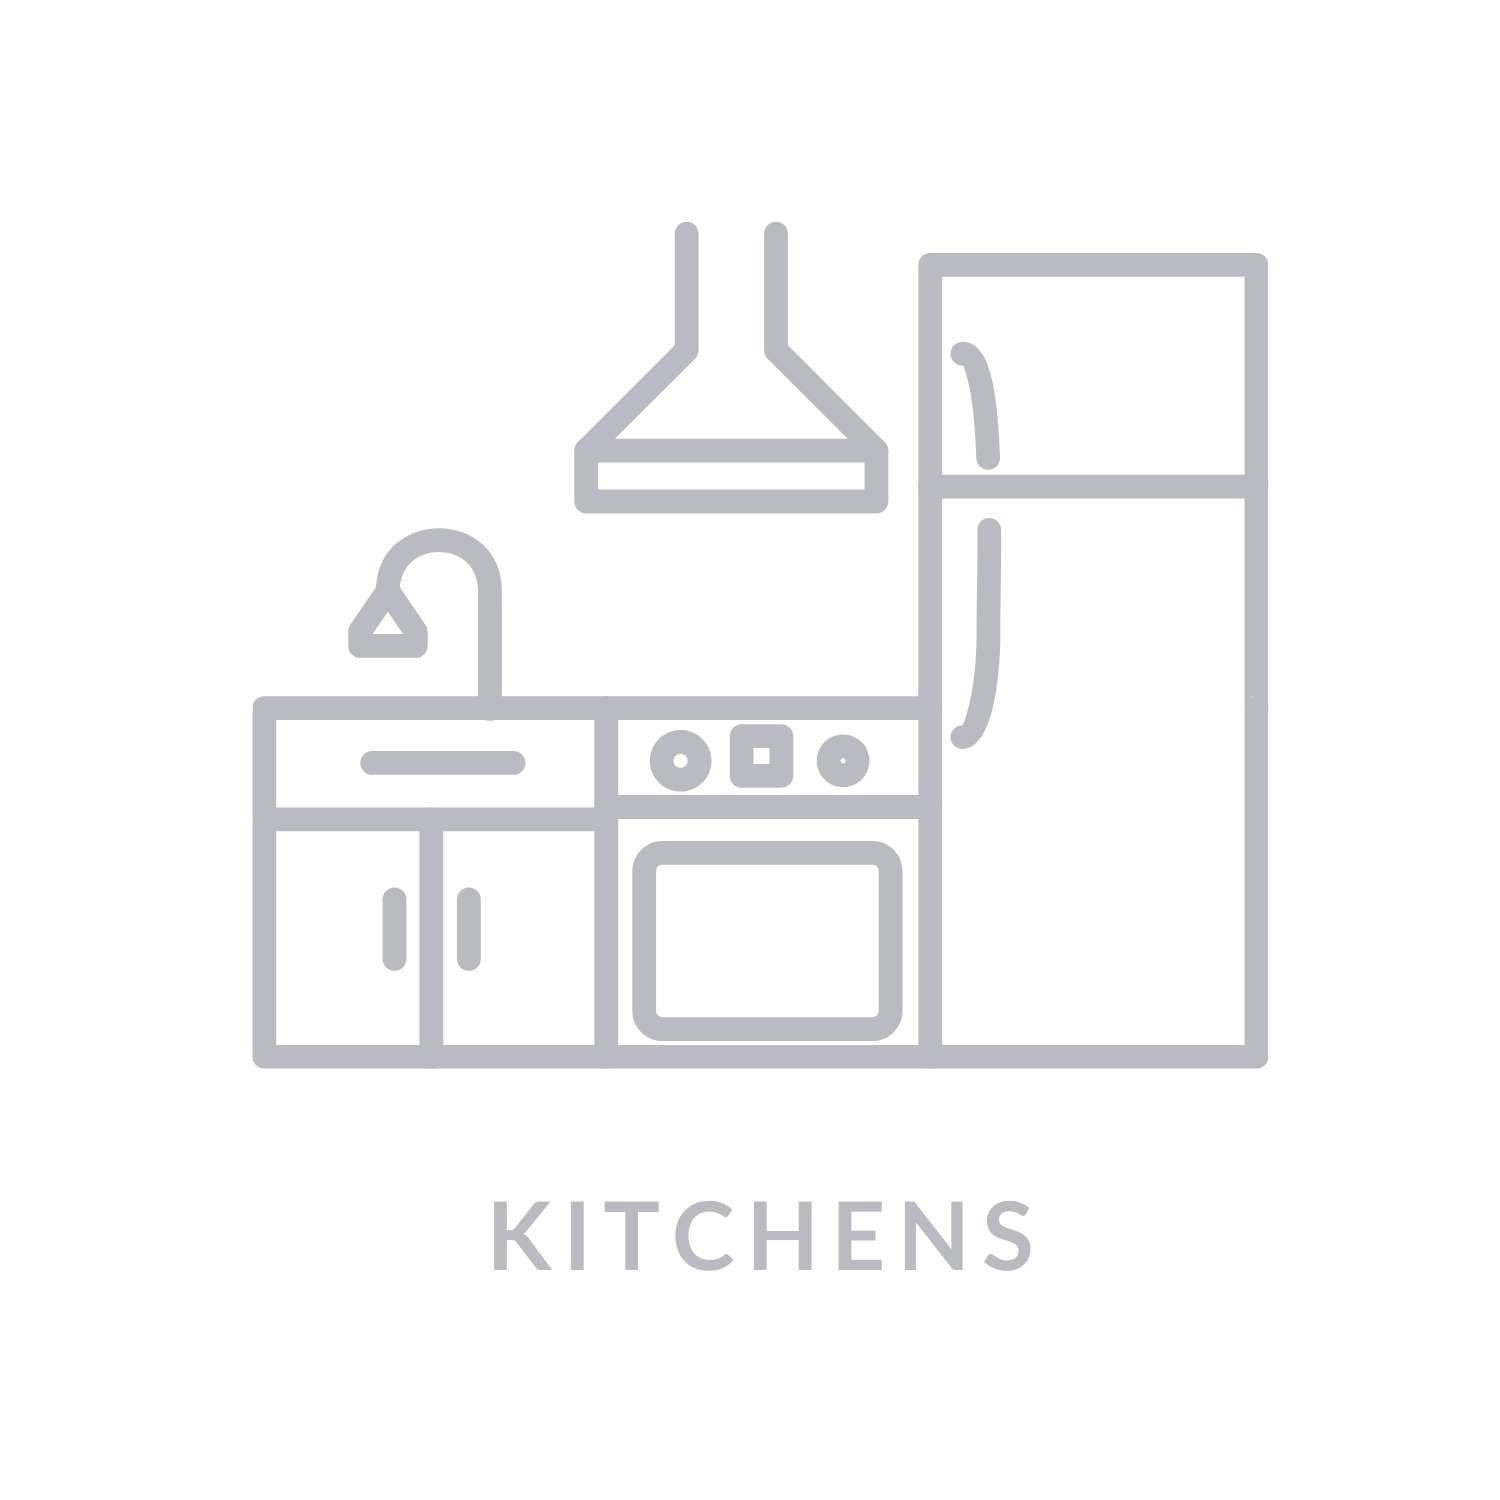 kitchens OFF.jpg